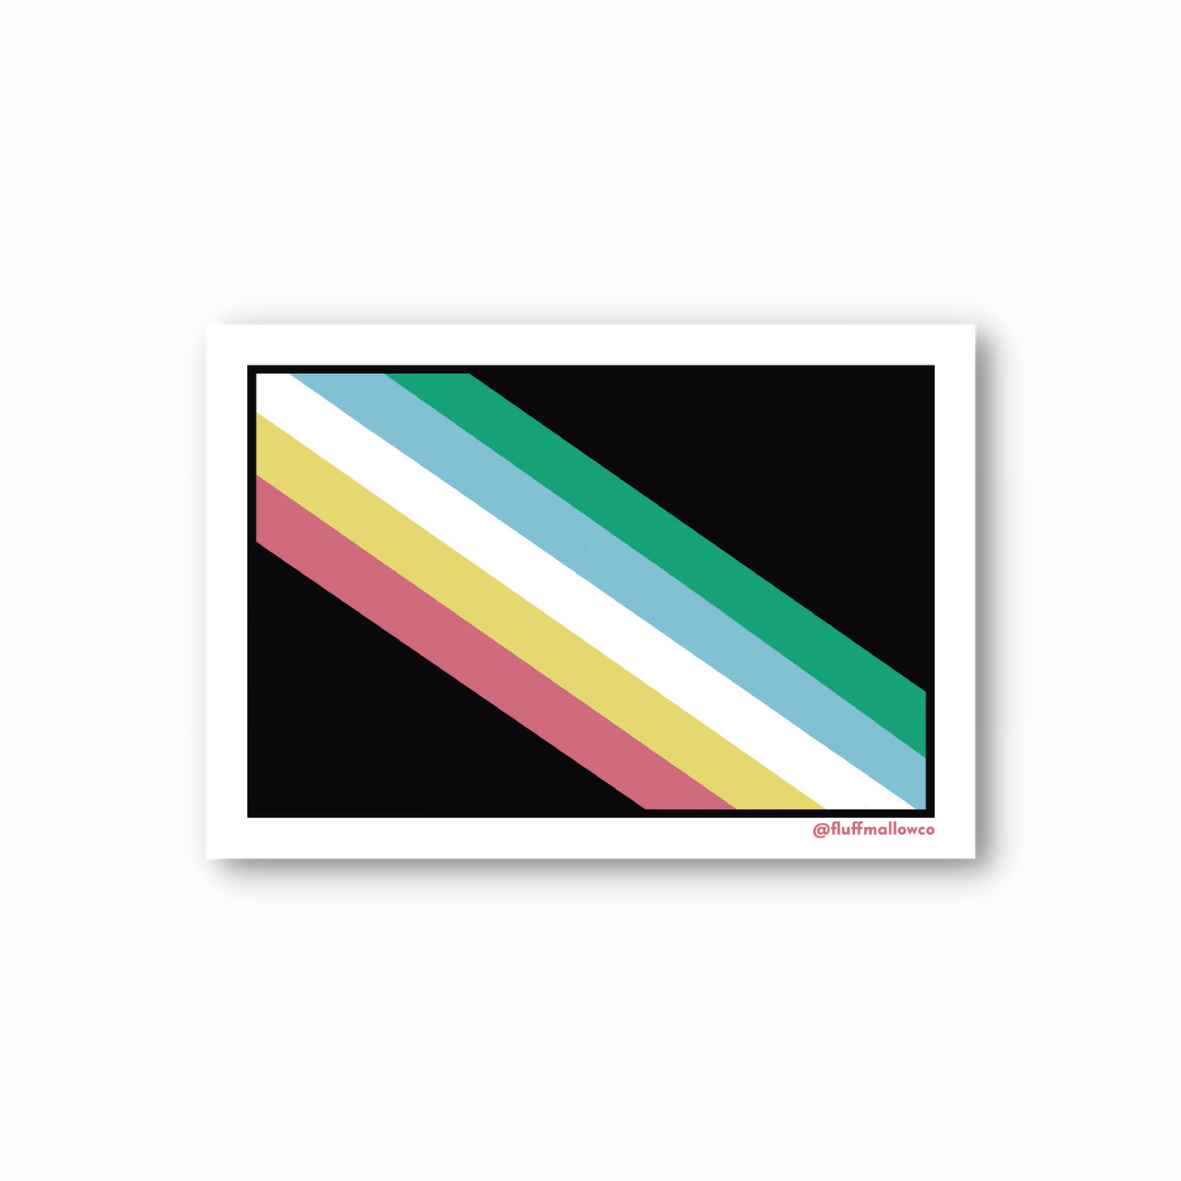 Disability pride flag vinyl sticker